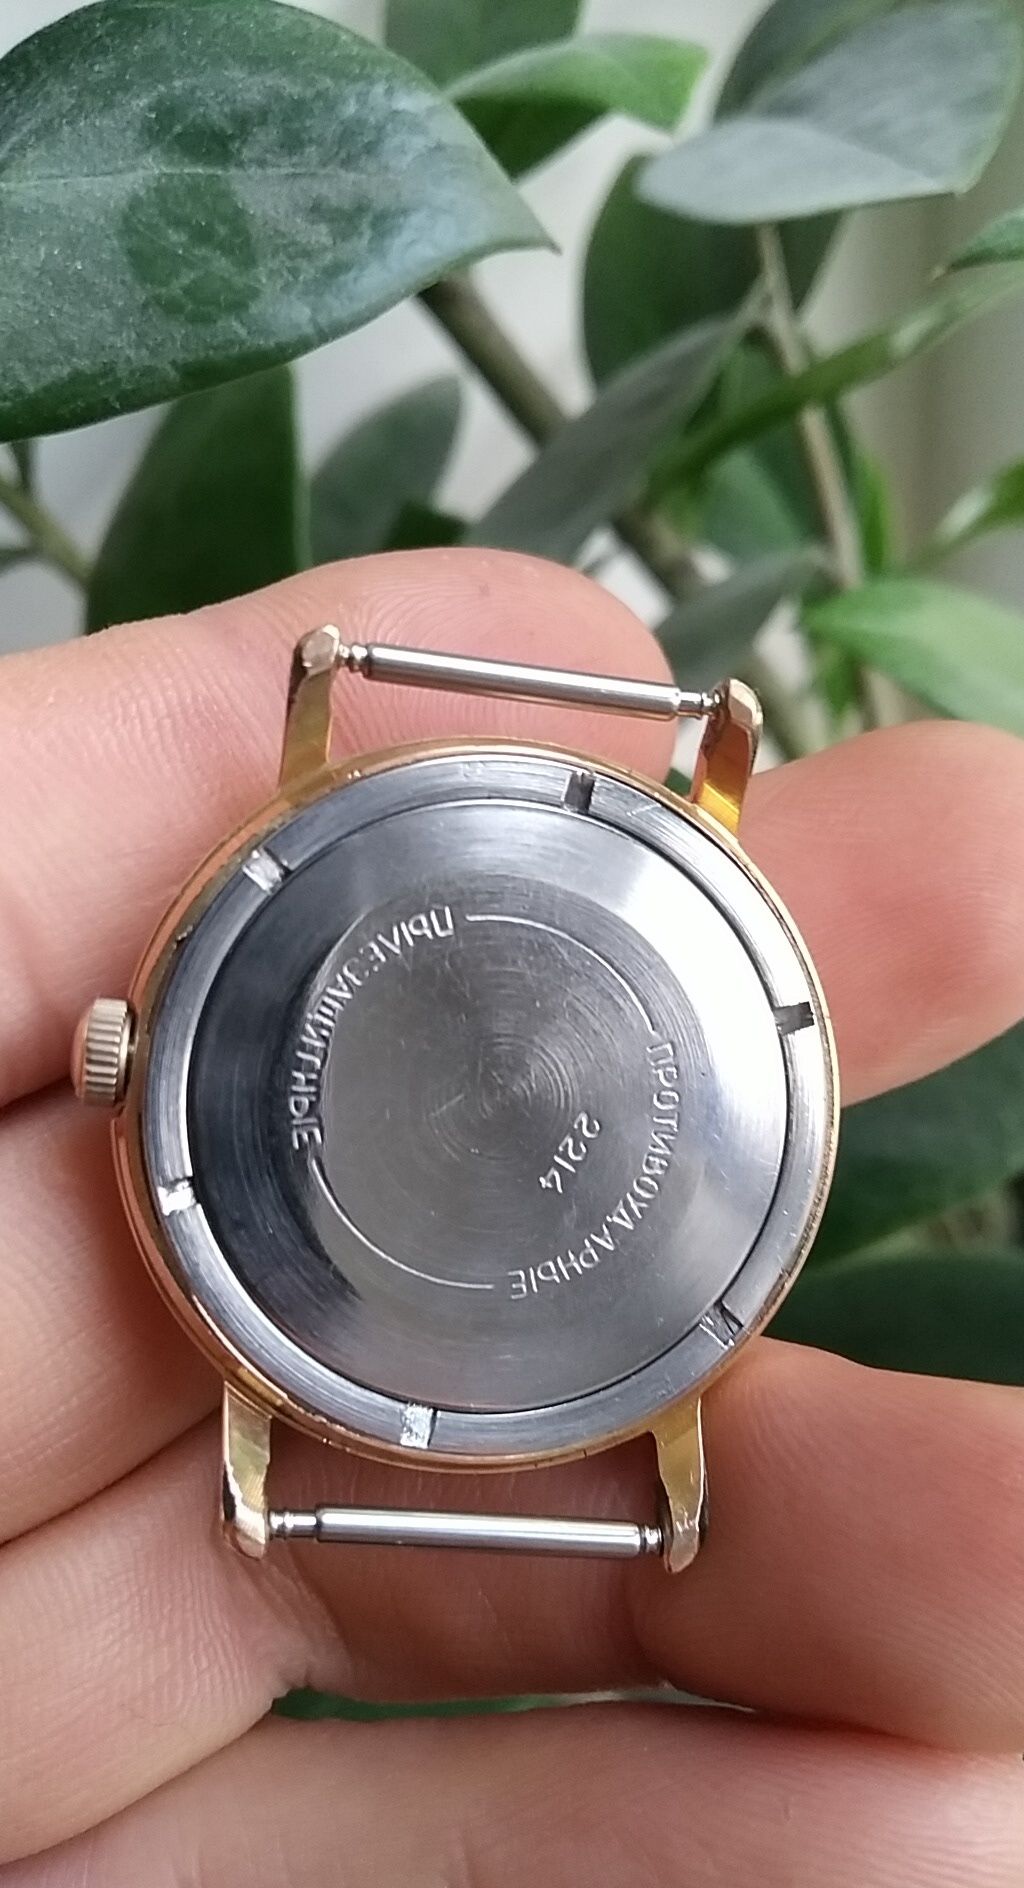 Часы Командирские "Стоп-секунда" в позолоченном Аи20 корпусе СССР